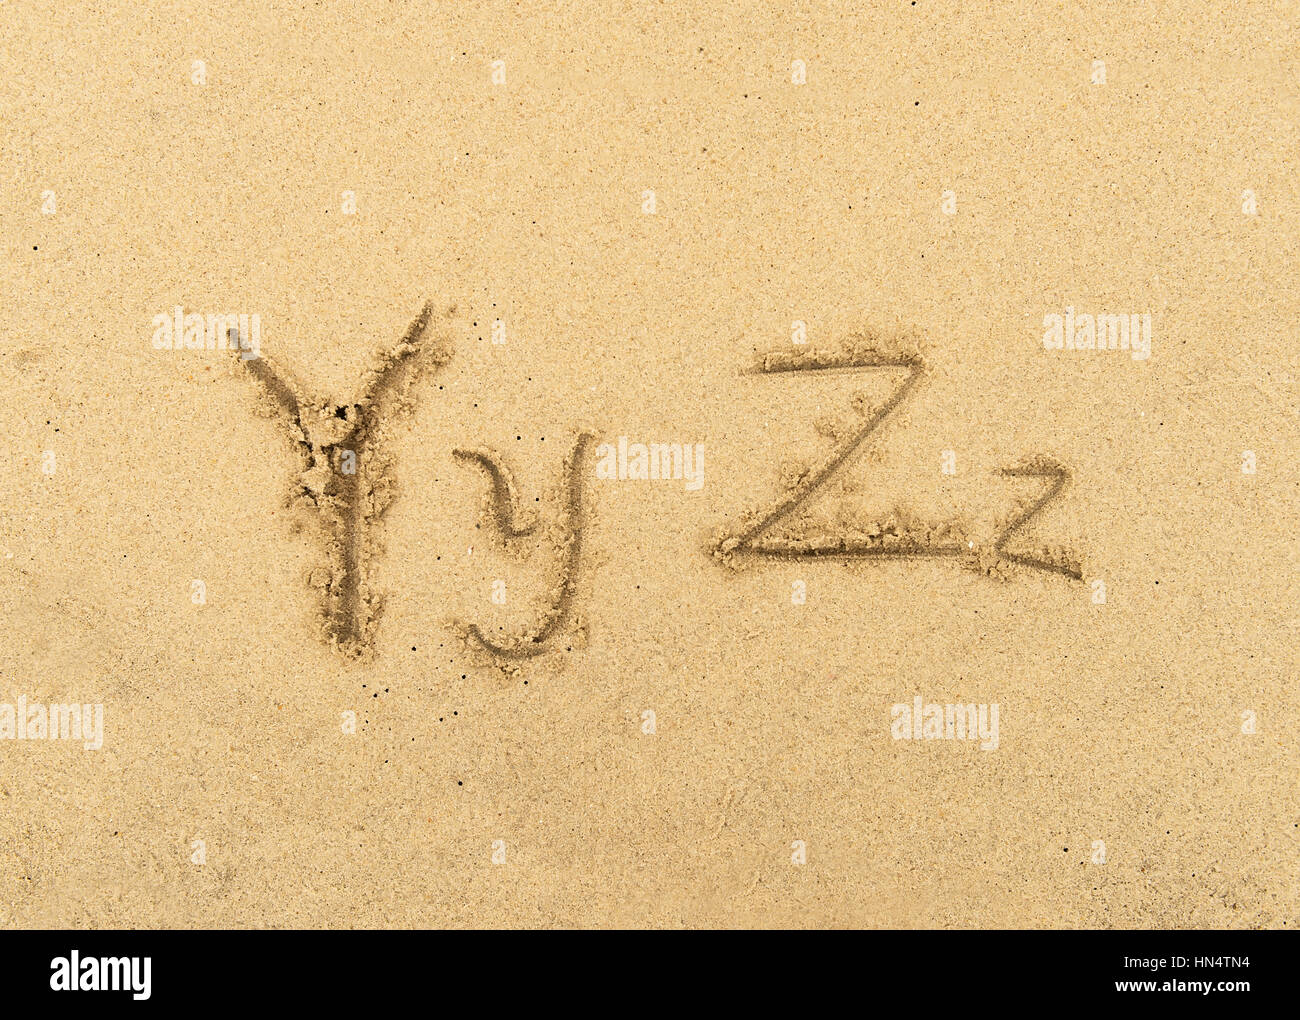 alphabet letters handwritten in sand on beach Stock Photo